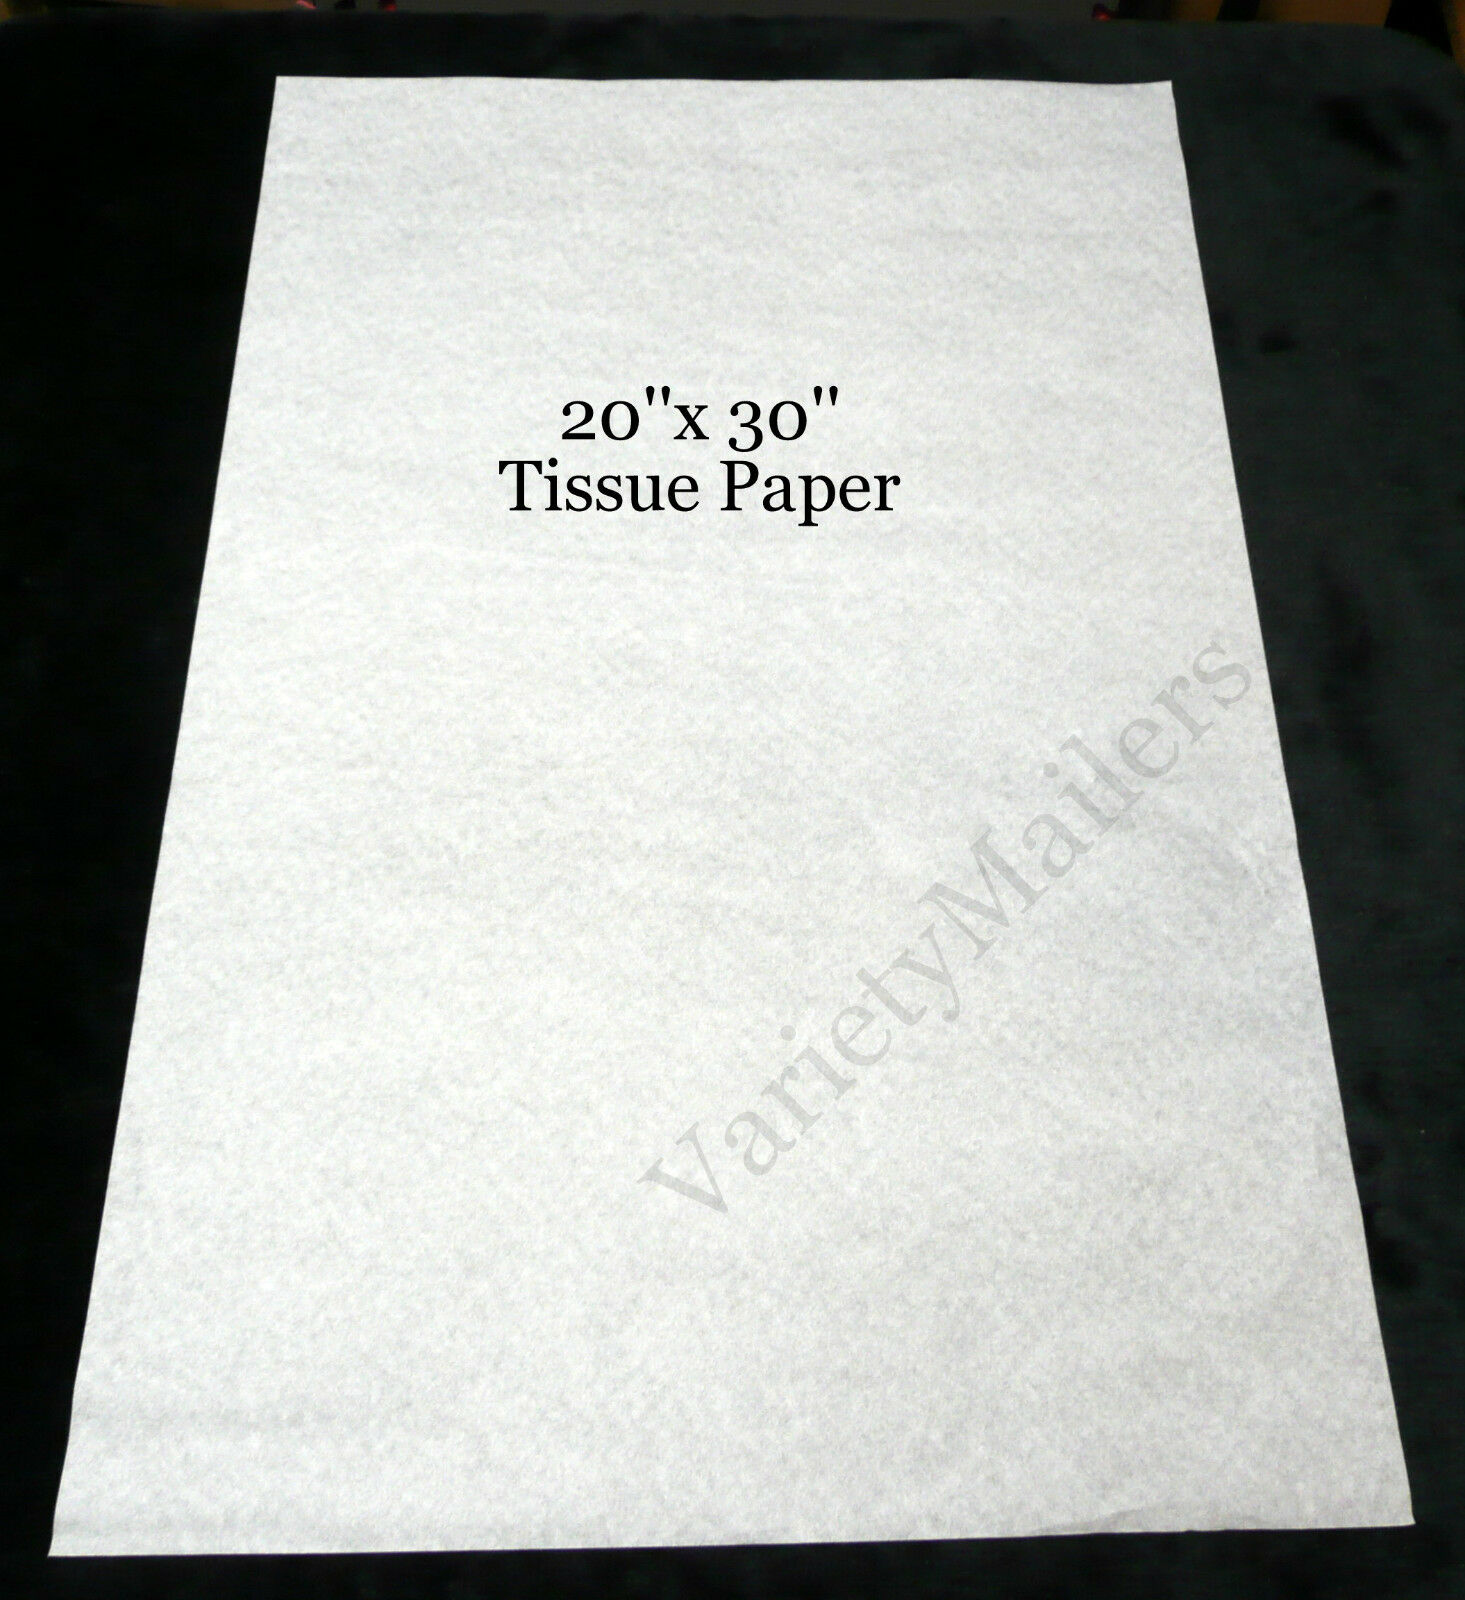 50 Sheets Of Premium White Tissue Paper 20 X 30 Matte Finish Free Shipping!